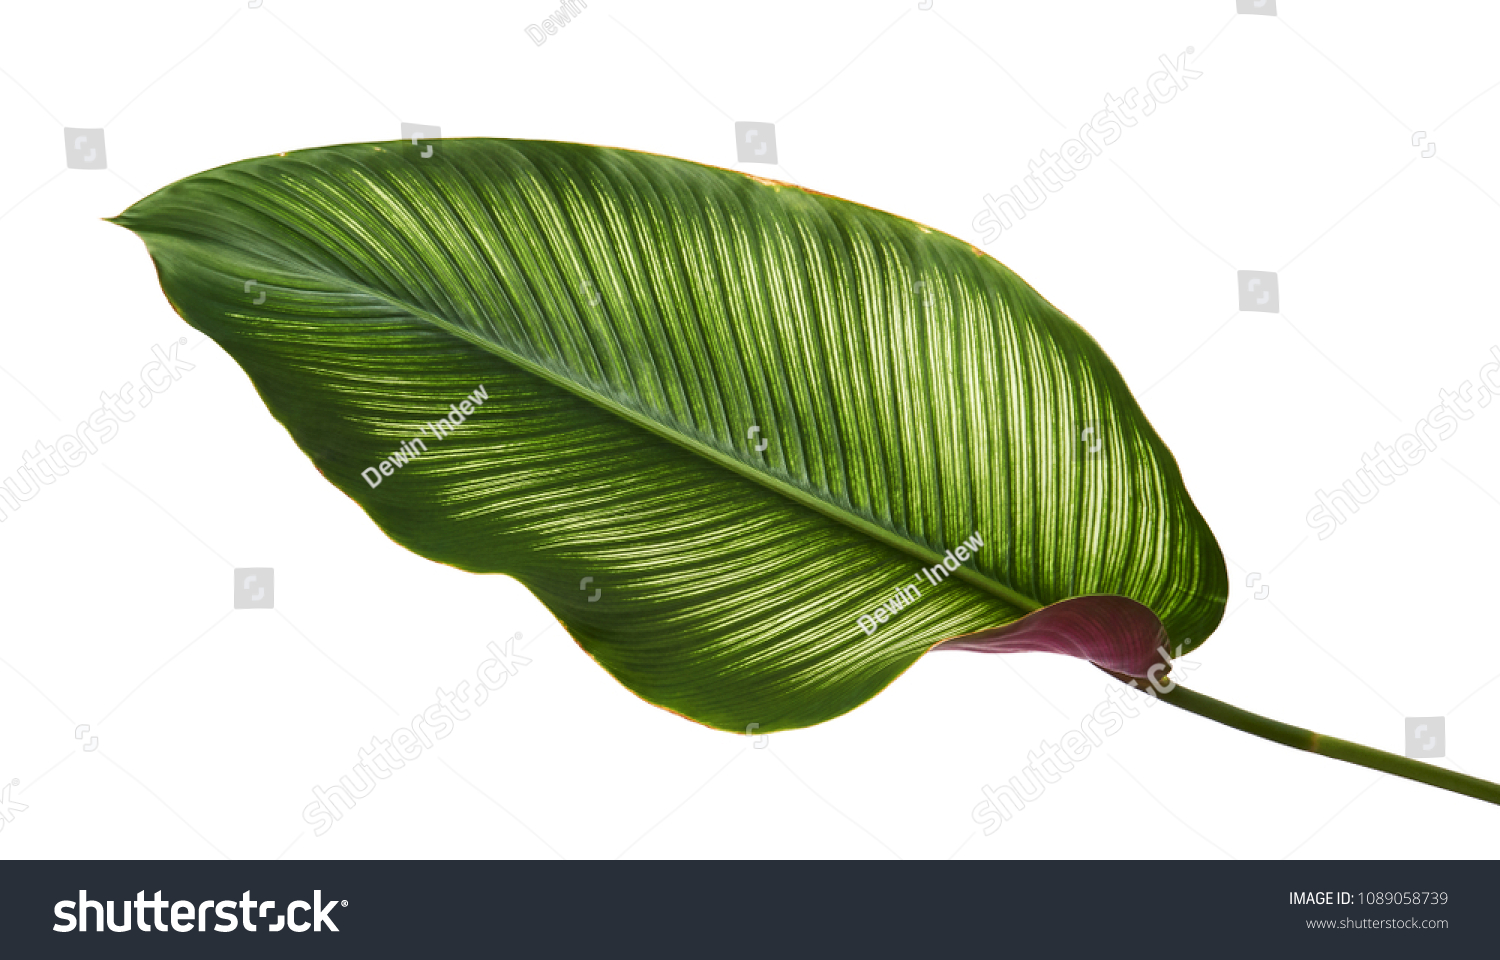 Calathea ornata (Pin-stripe Calathea) leaves, Tropical foliage isolated on white background, with clipping path                               #1089058739